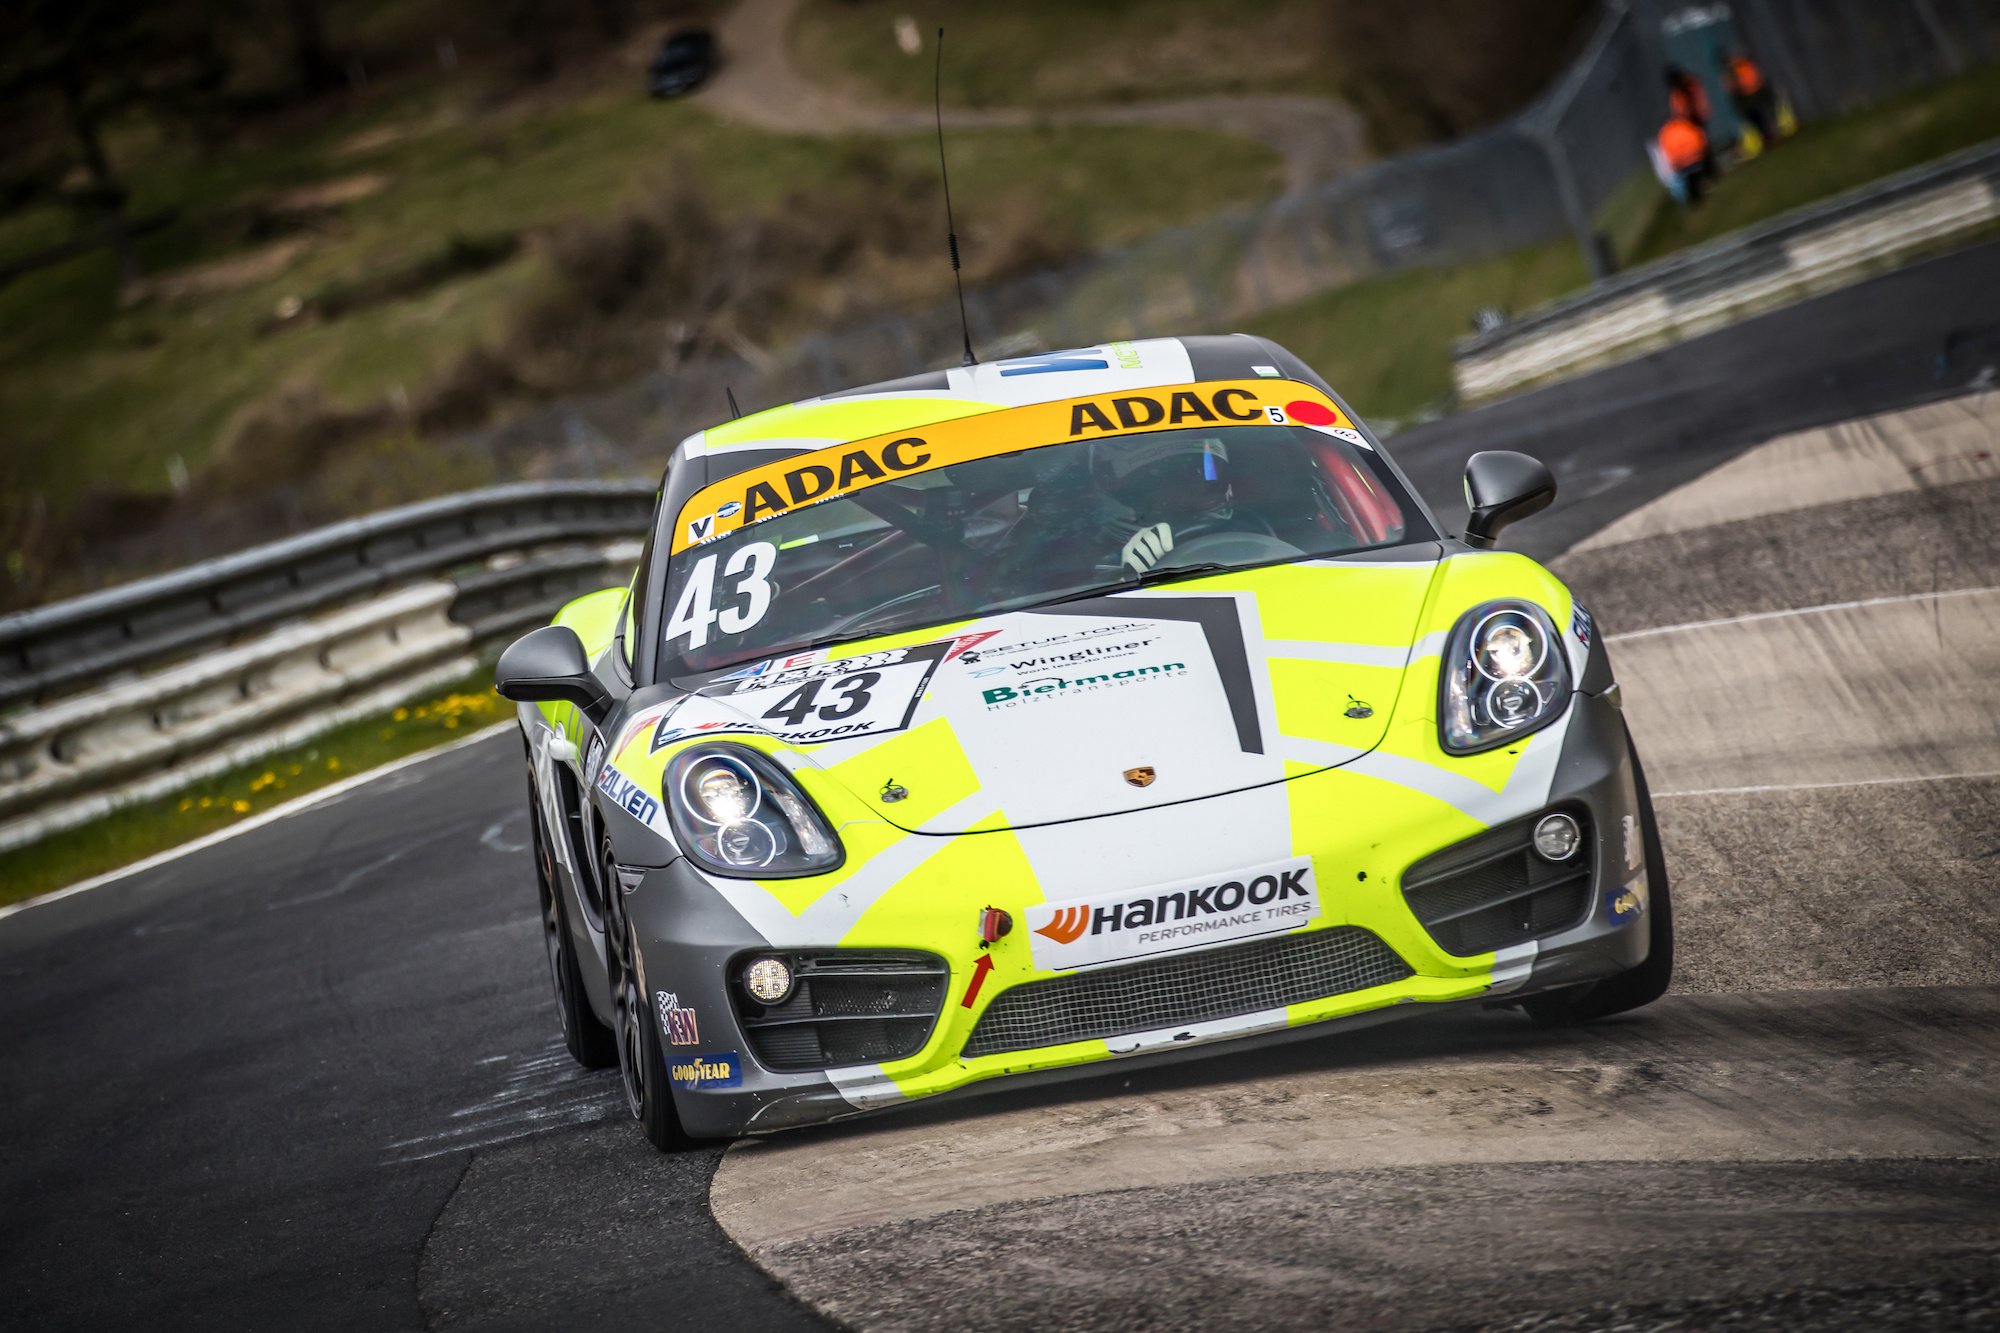 Autocross: Niclas Wiedmann drives Porsche Cayman V5, Competitive motorsport, Hankook Tires. 2000x1340 HD Background.